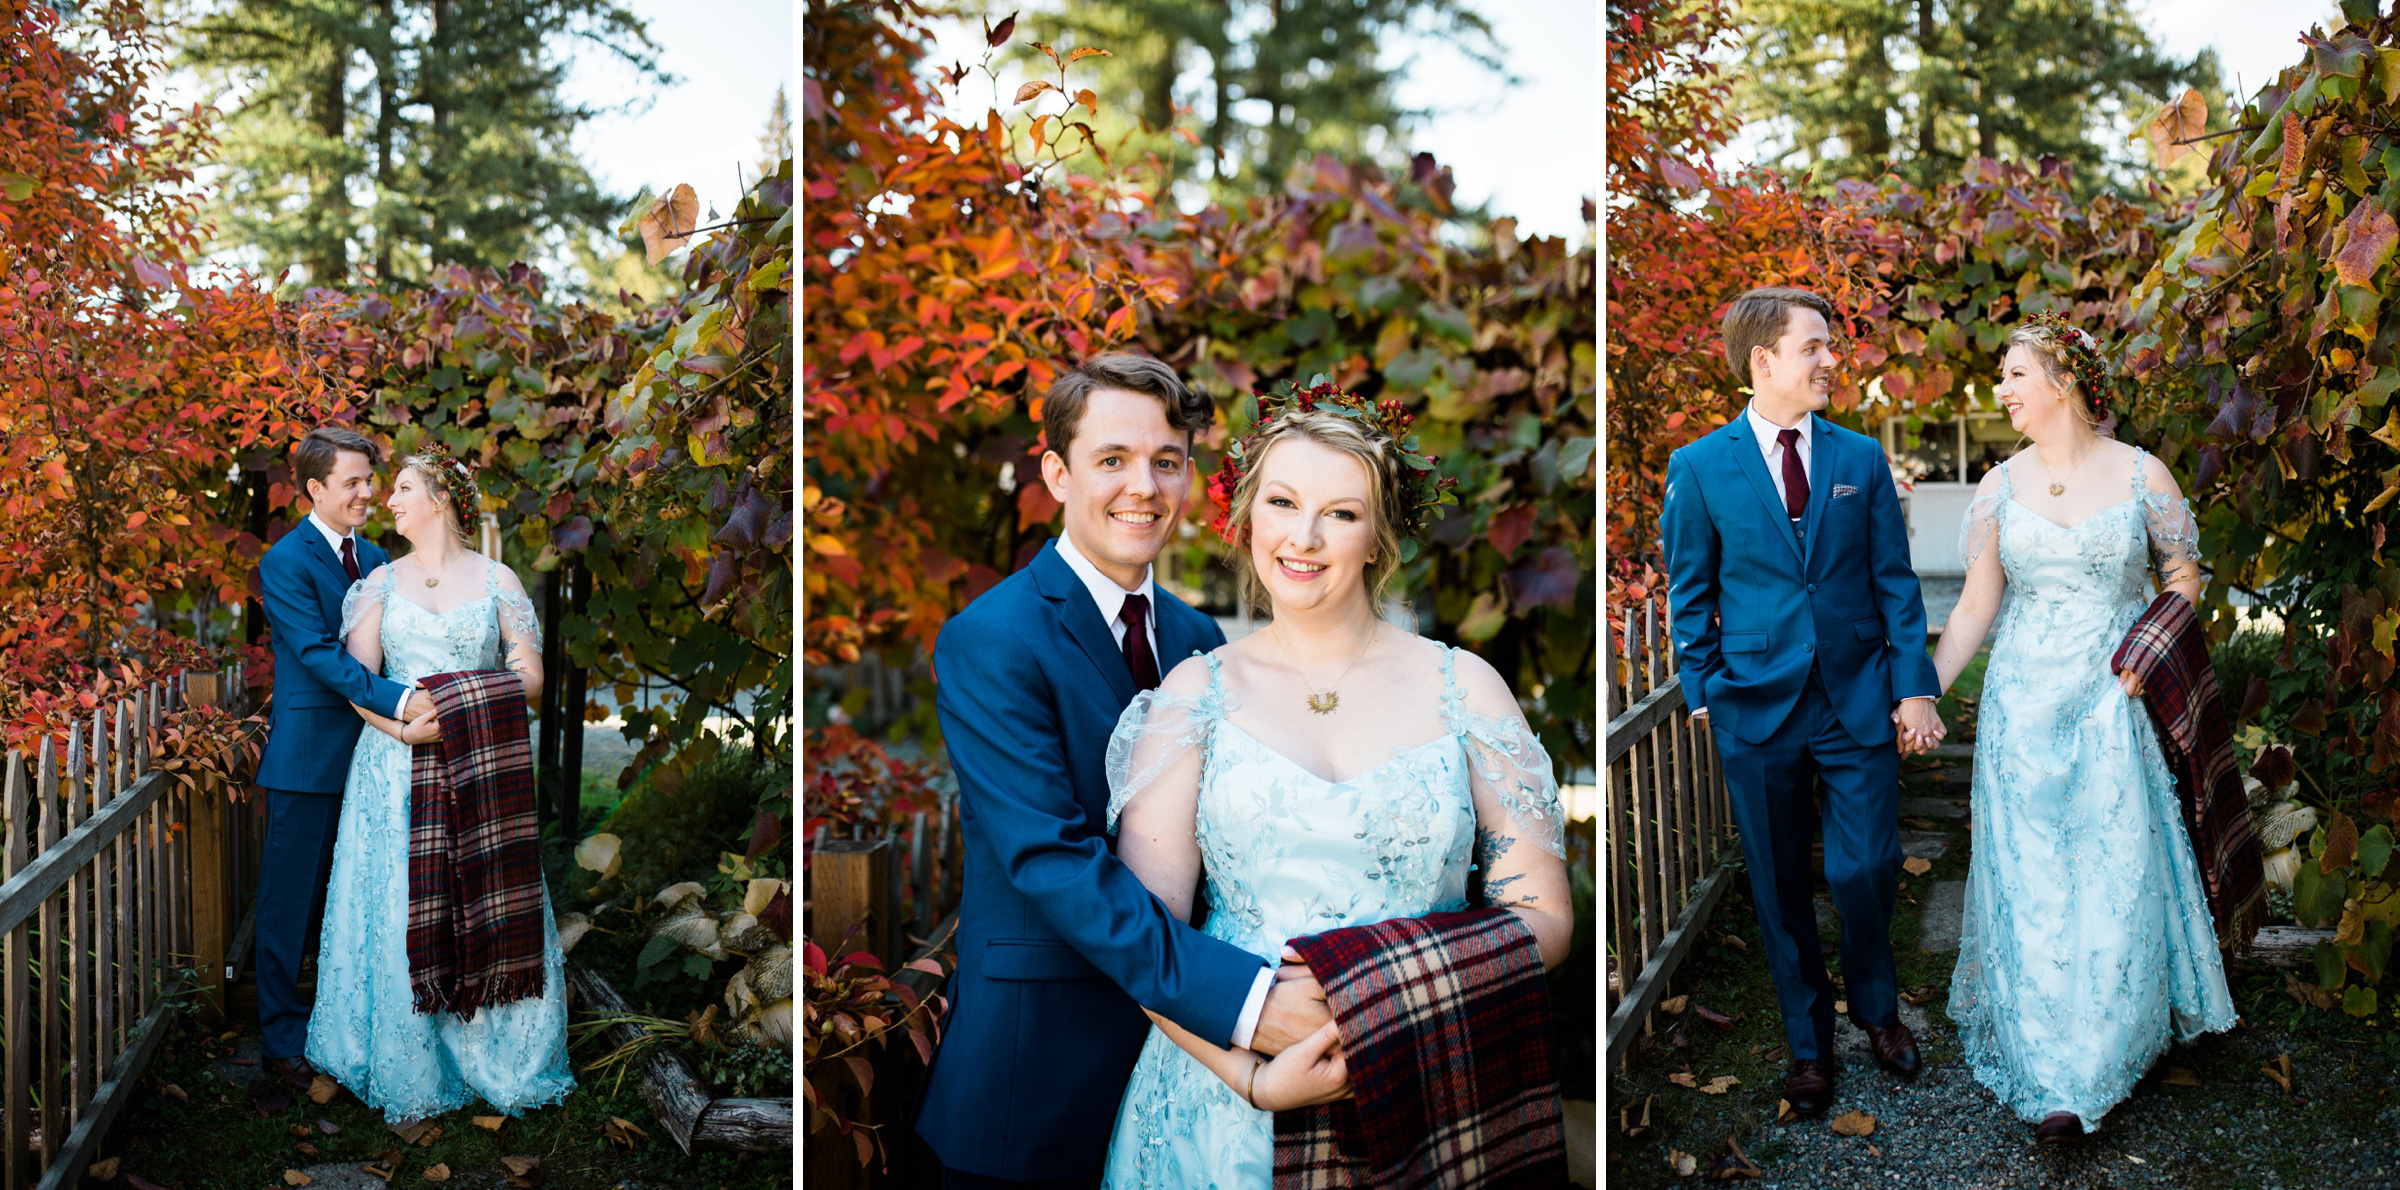 10-Black-Diamond-Gardens-Wedding-Seattle-Photographer-Bride-Groom-Portraits-Fall-Autumn-Leaves-Plaid